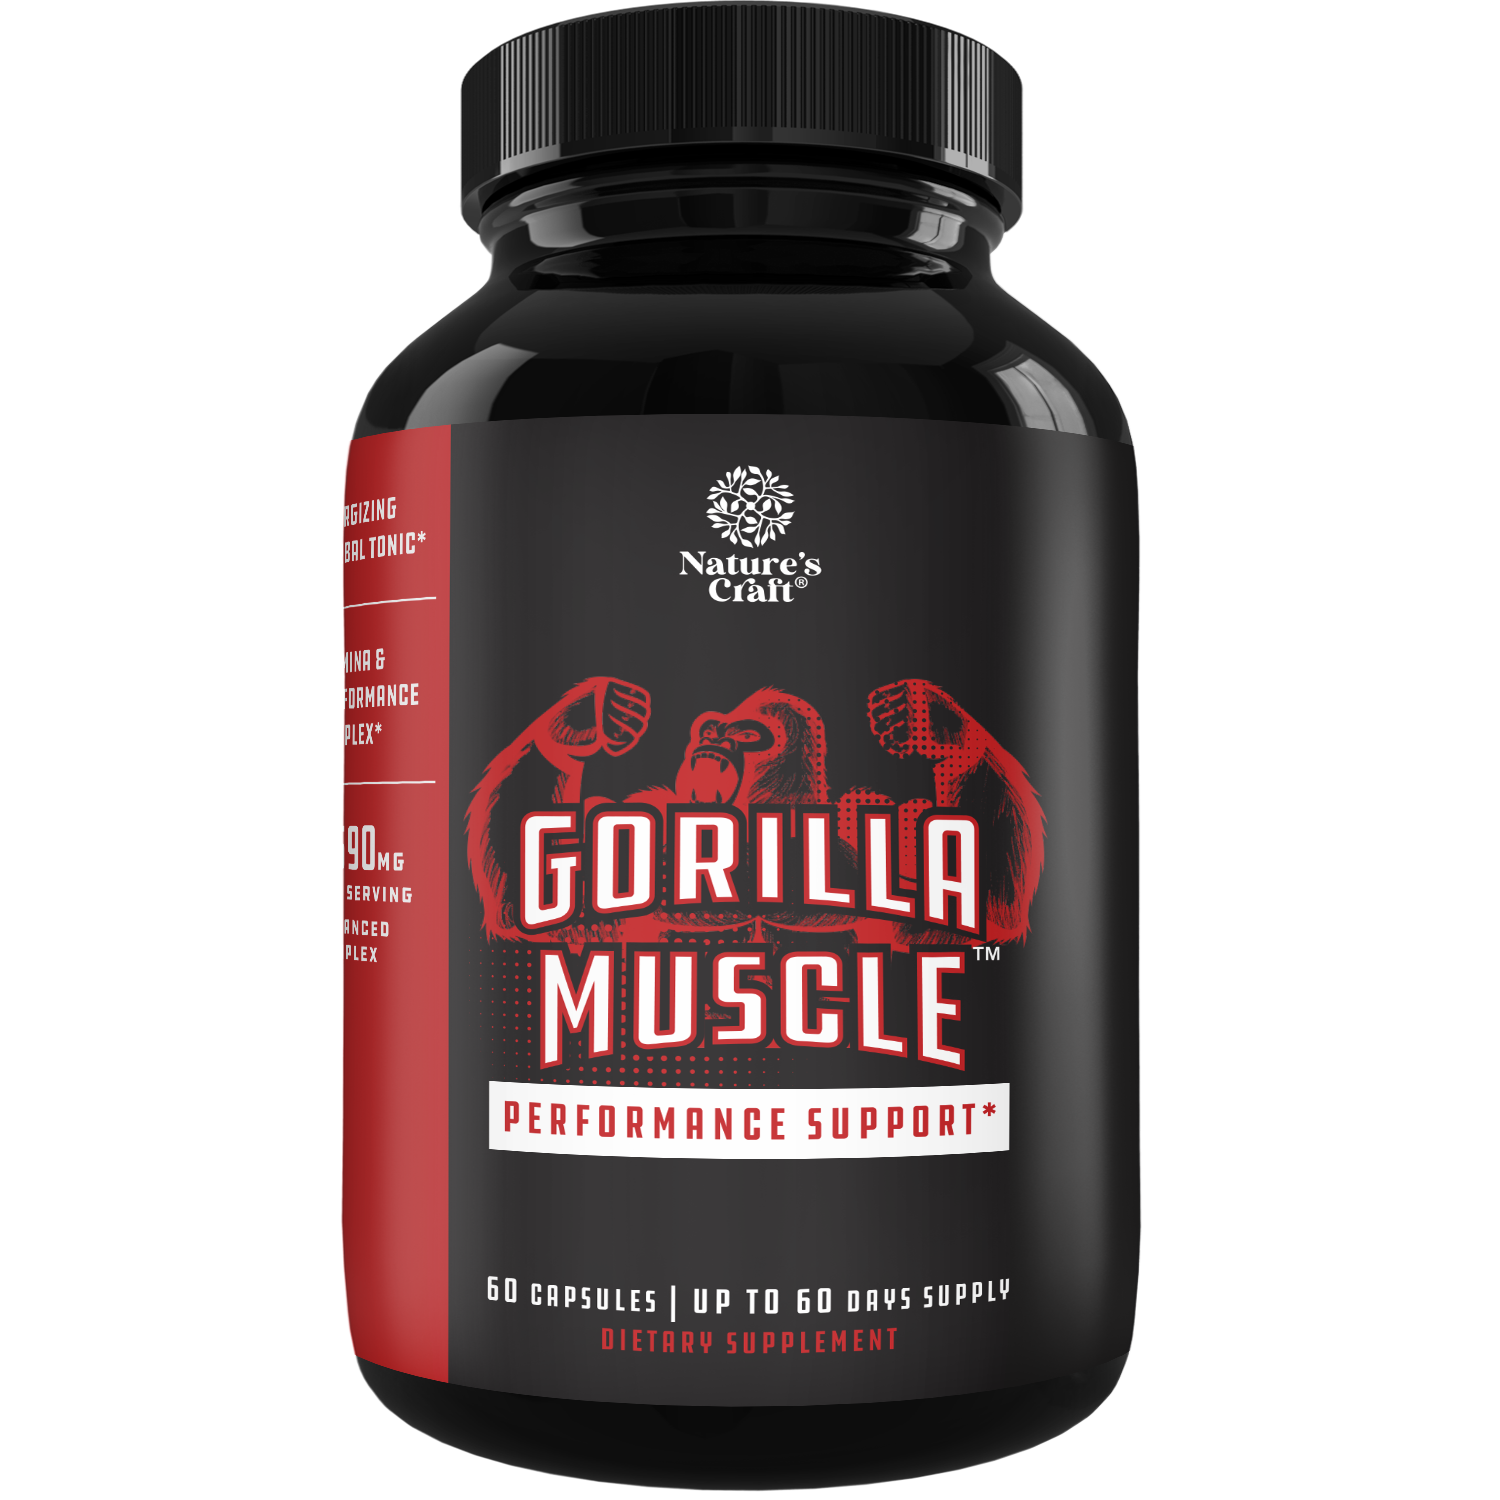 Gorilla Muscle